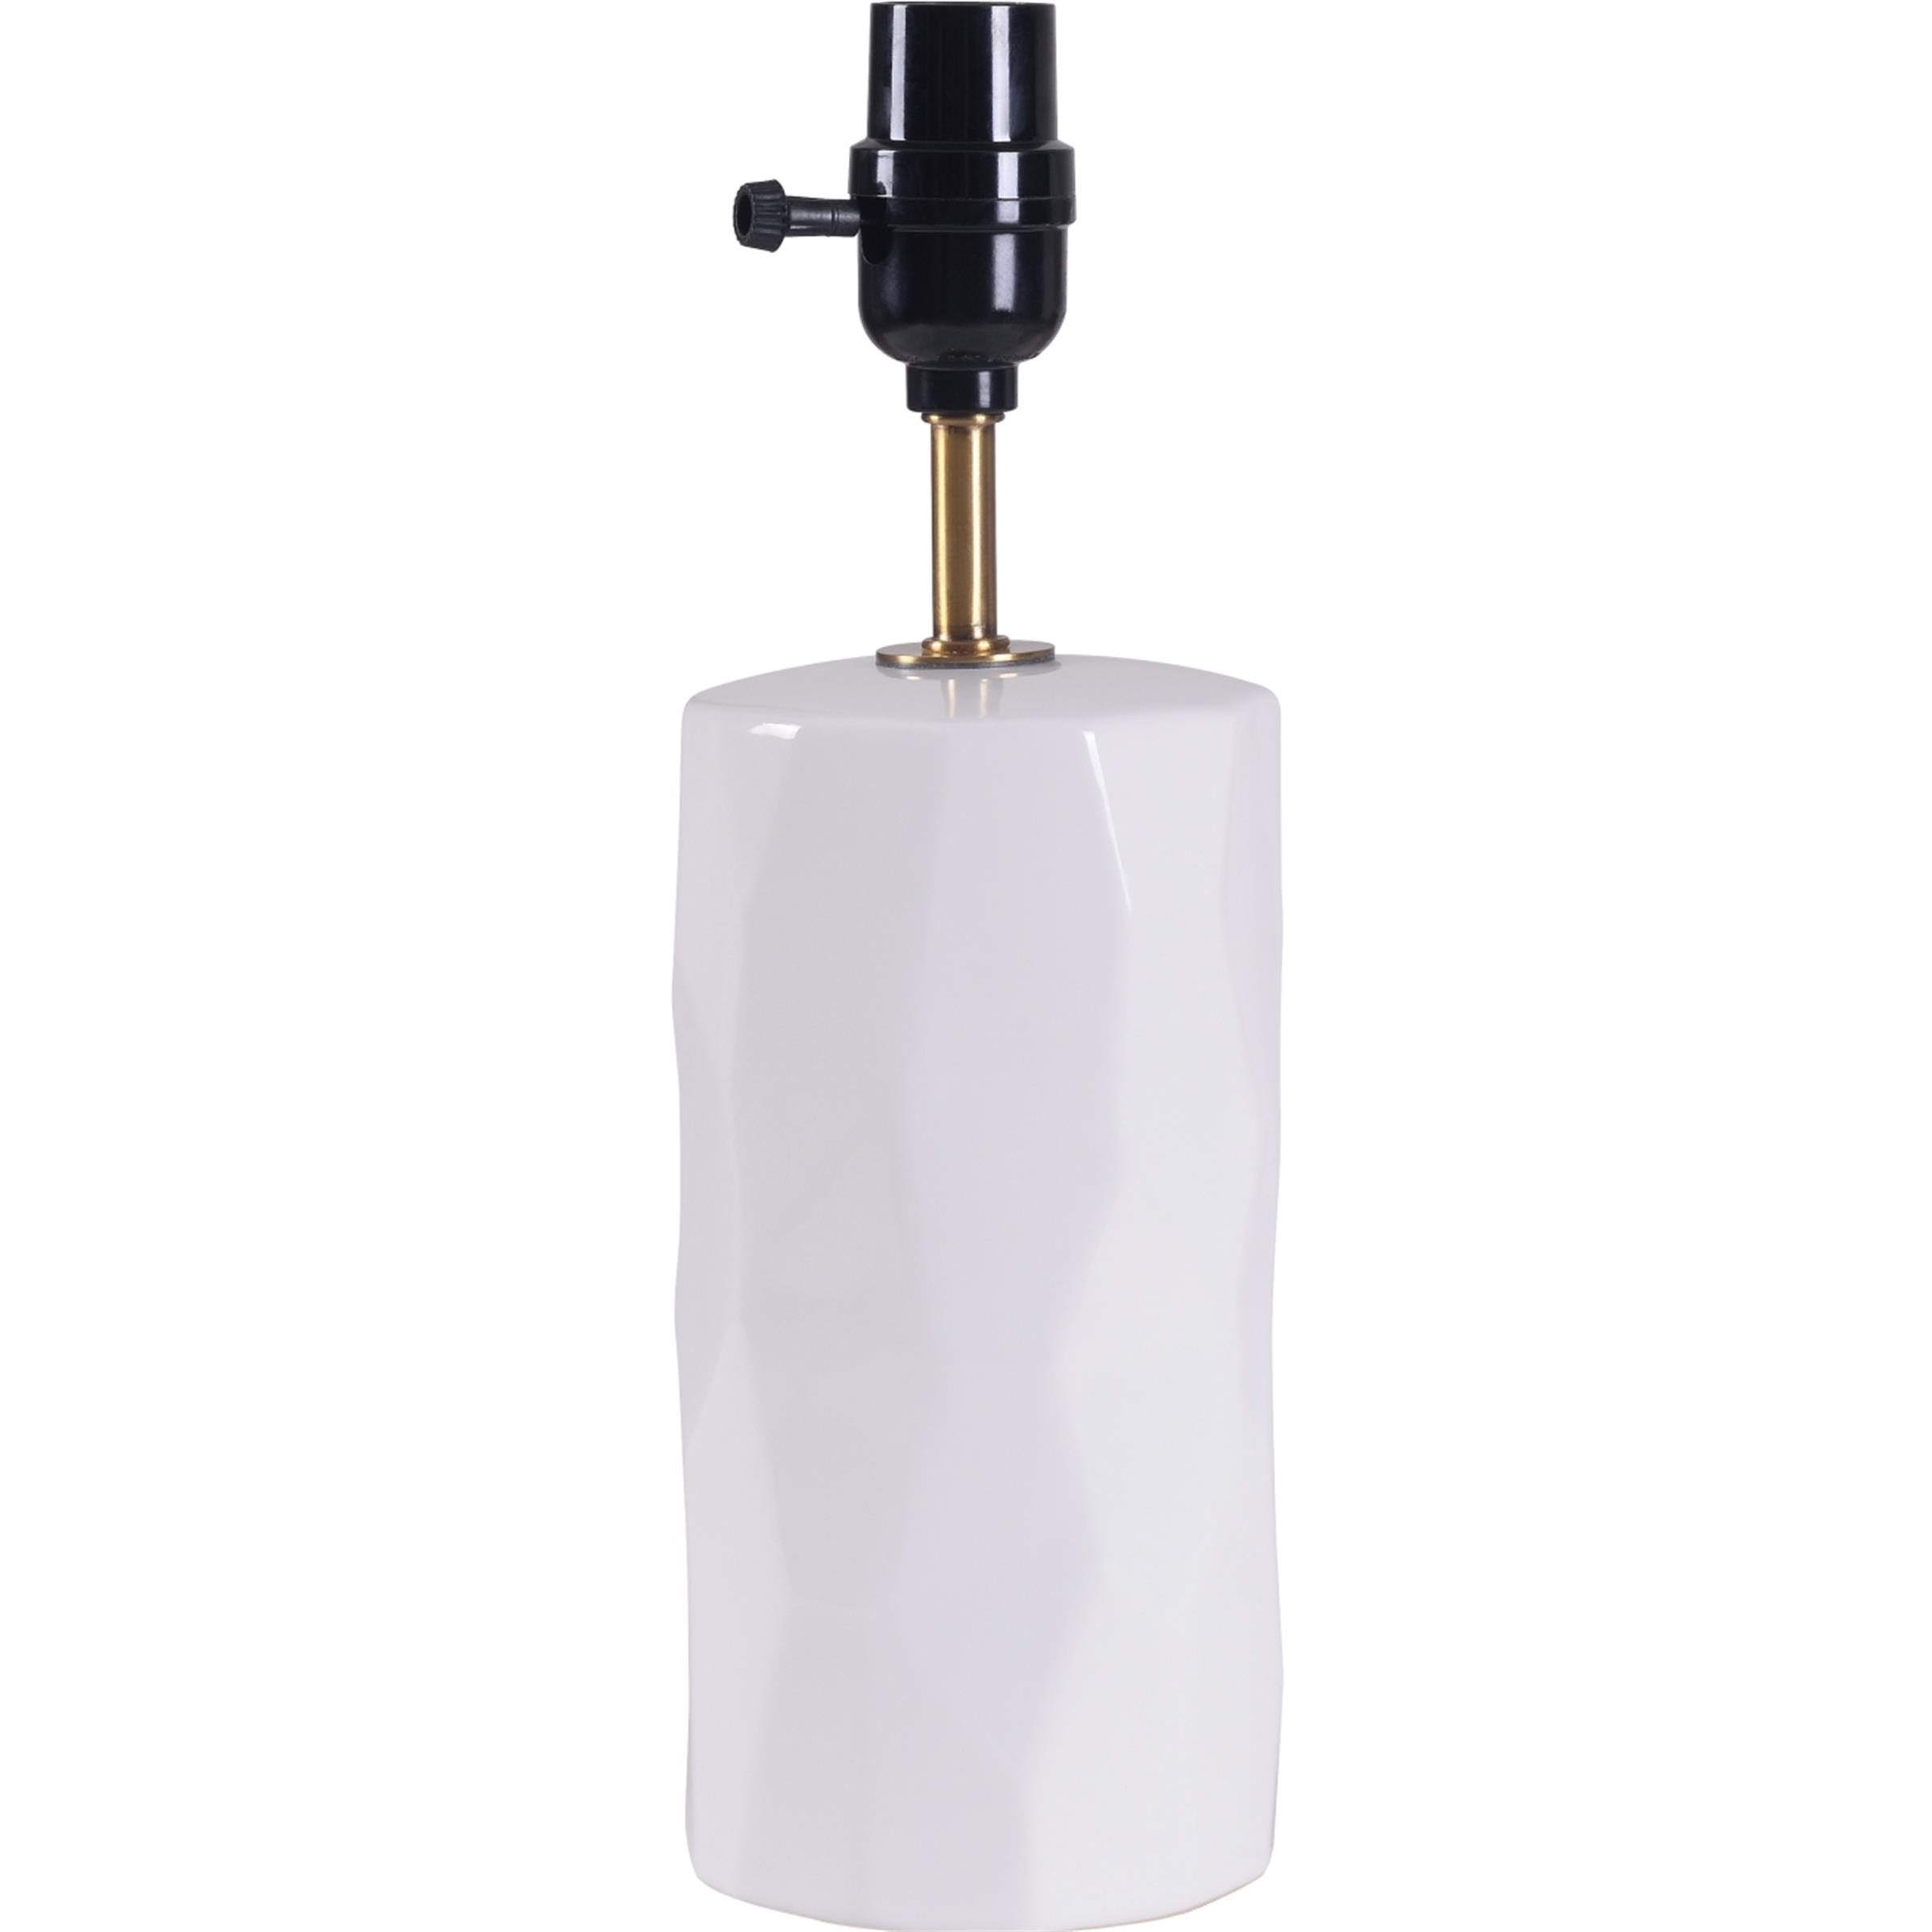 Mainstays White Ceramic Table Lamp, 17"H - image 4 of 6